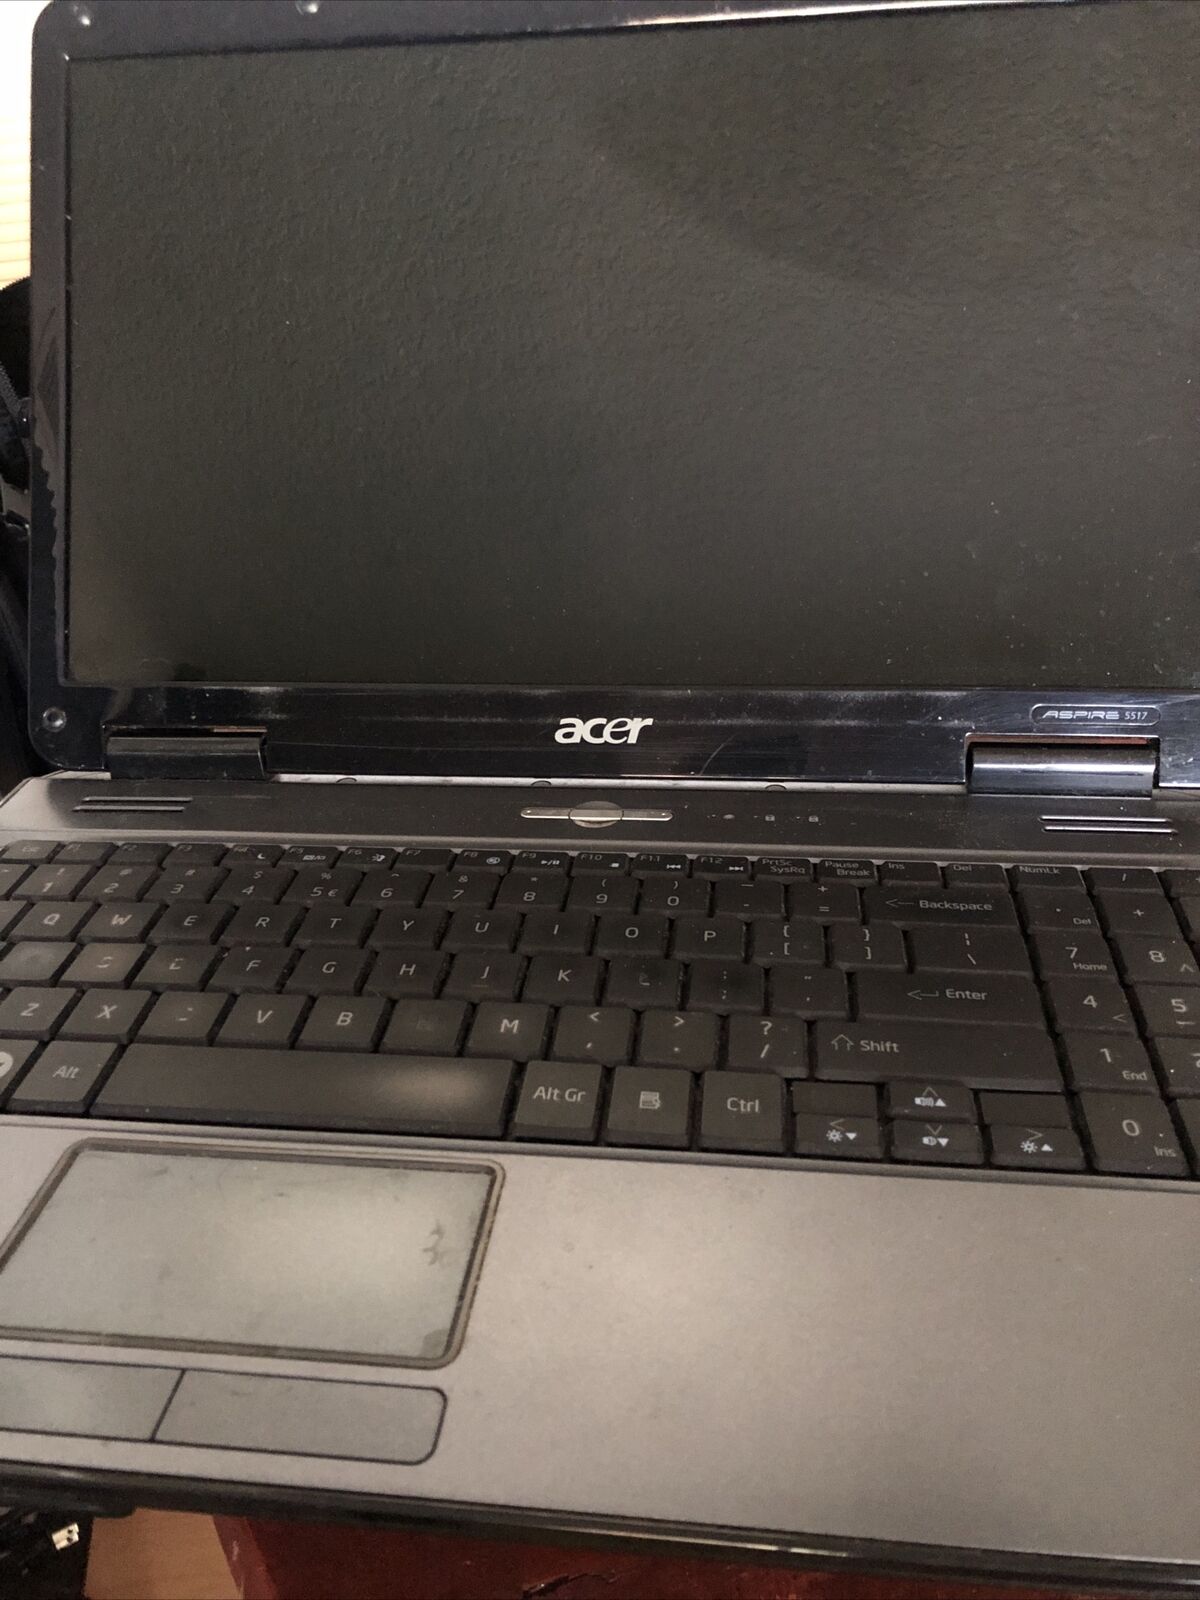 Acer aspire 5517 Labtop Computer Laptop